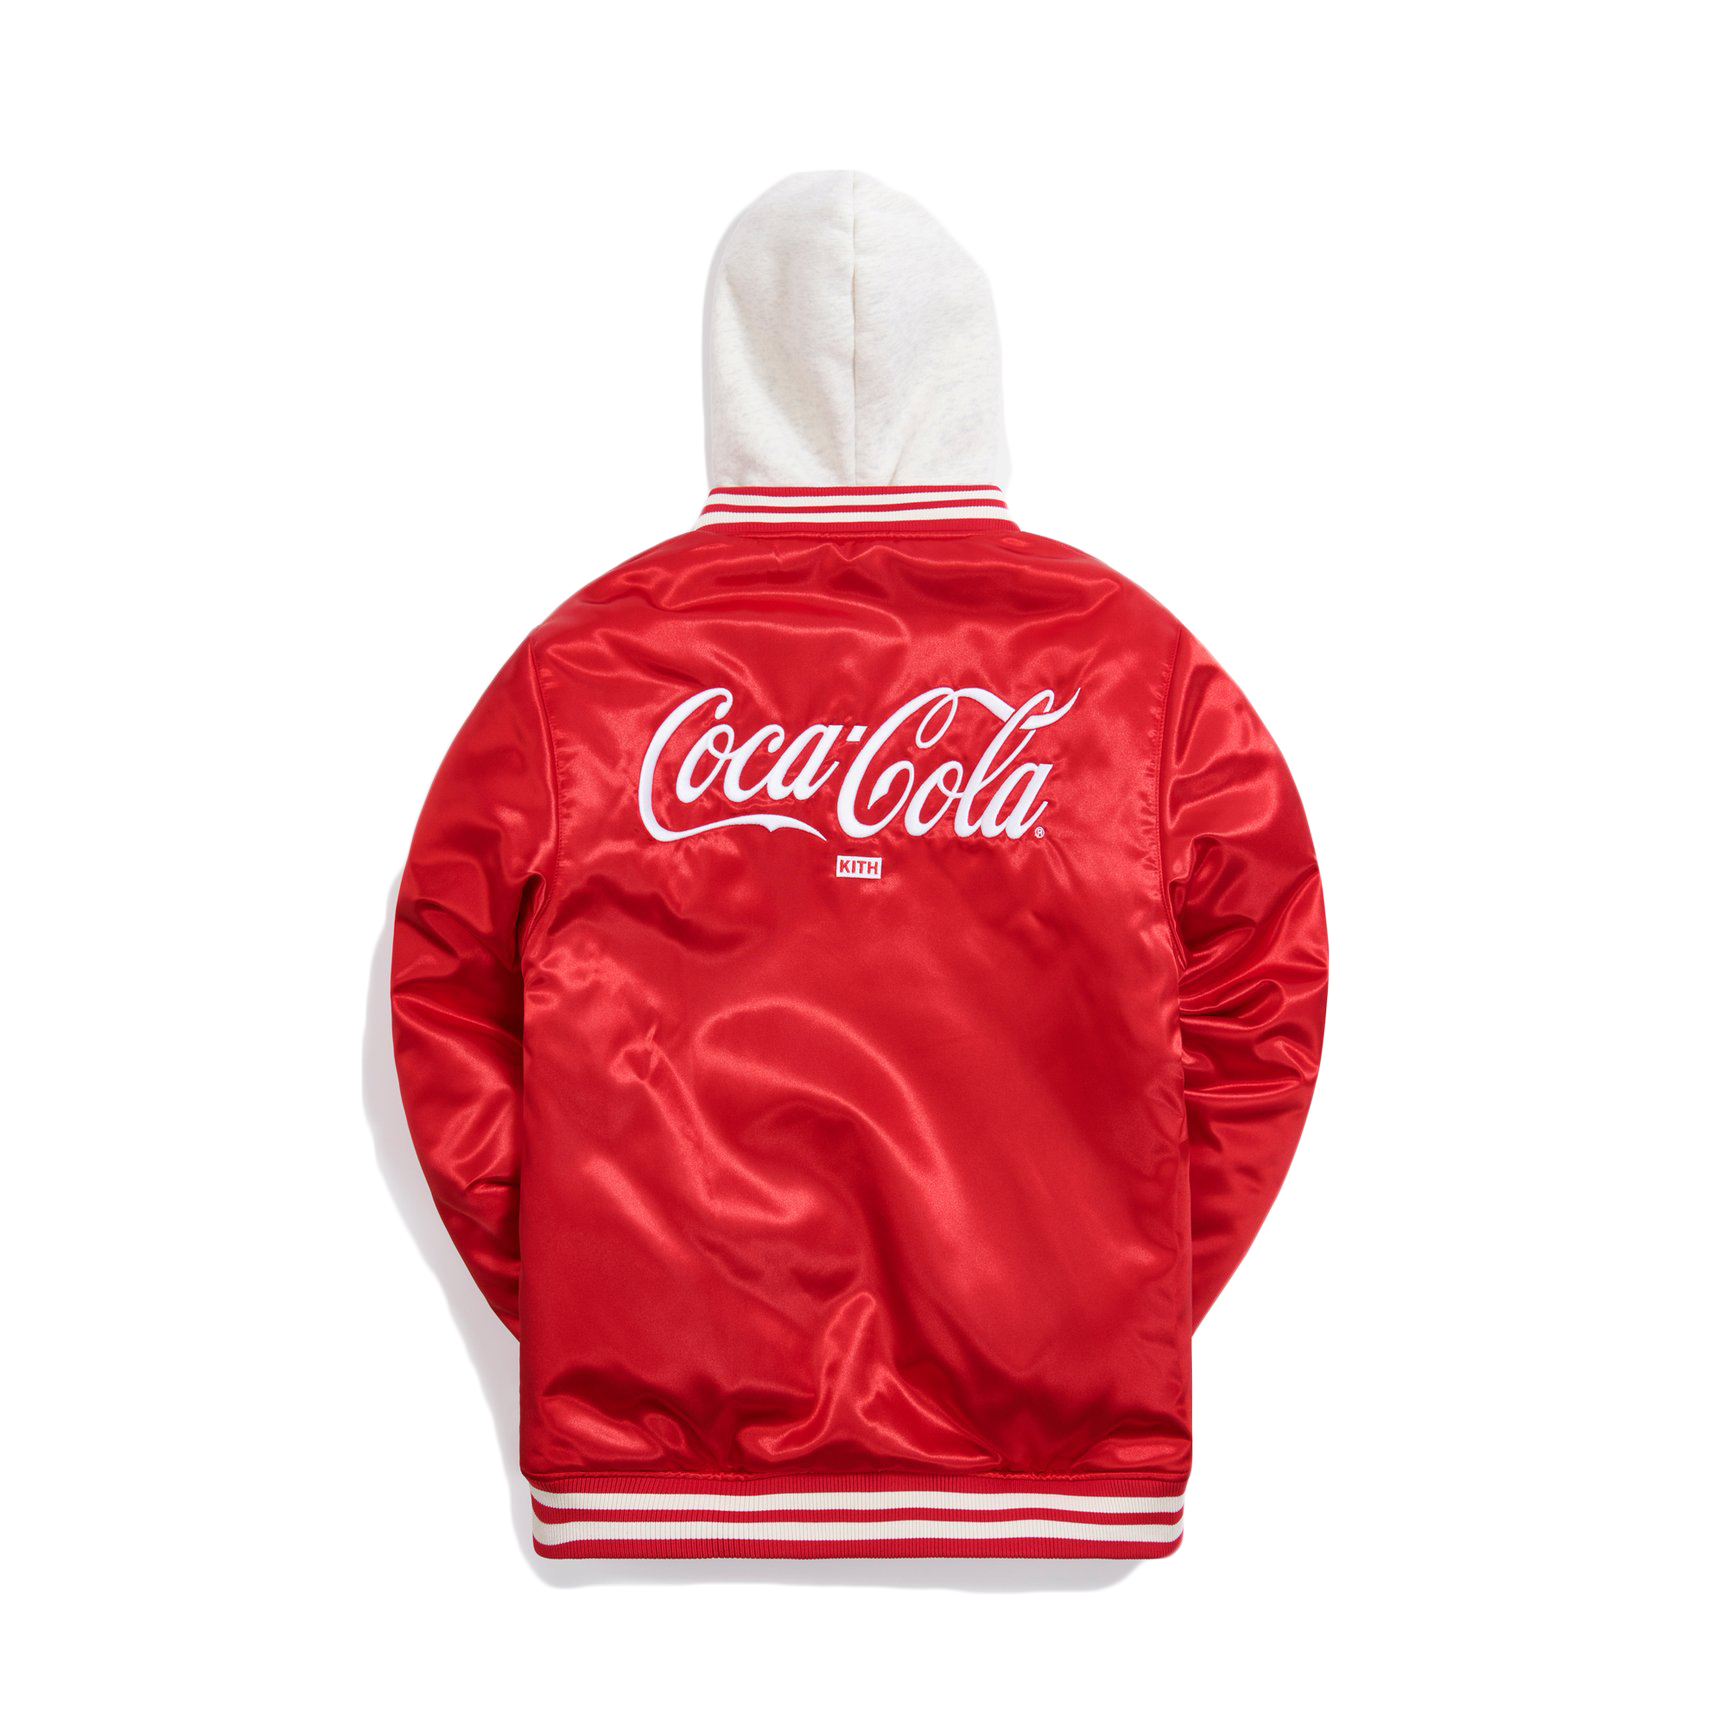 Vintage Large Coca-Cola Jacket - clothing & accessories - by owner -  apparel sale - craigslist